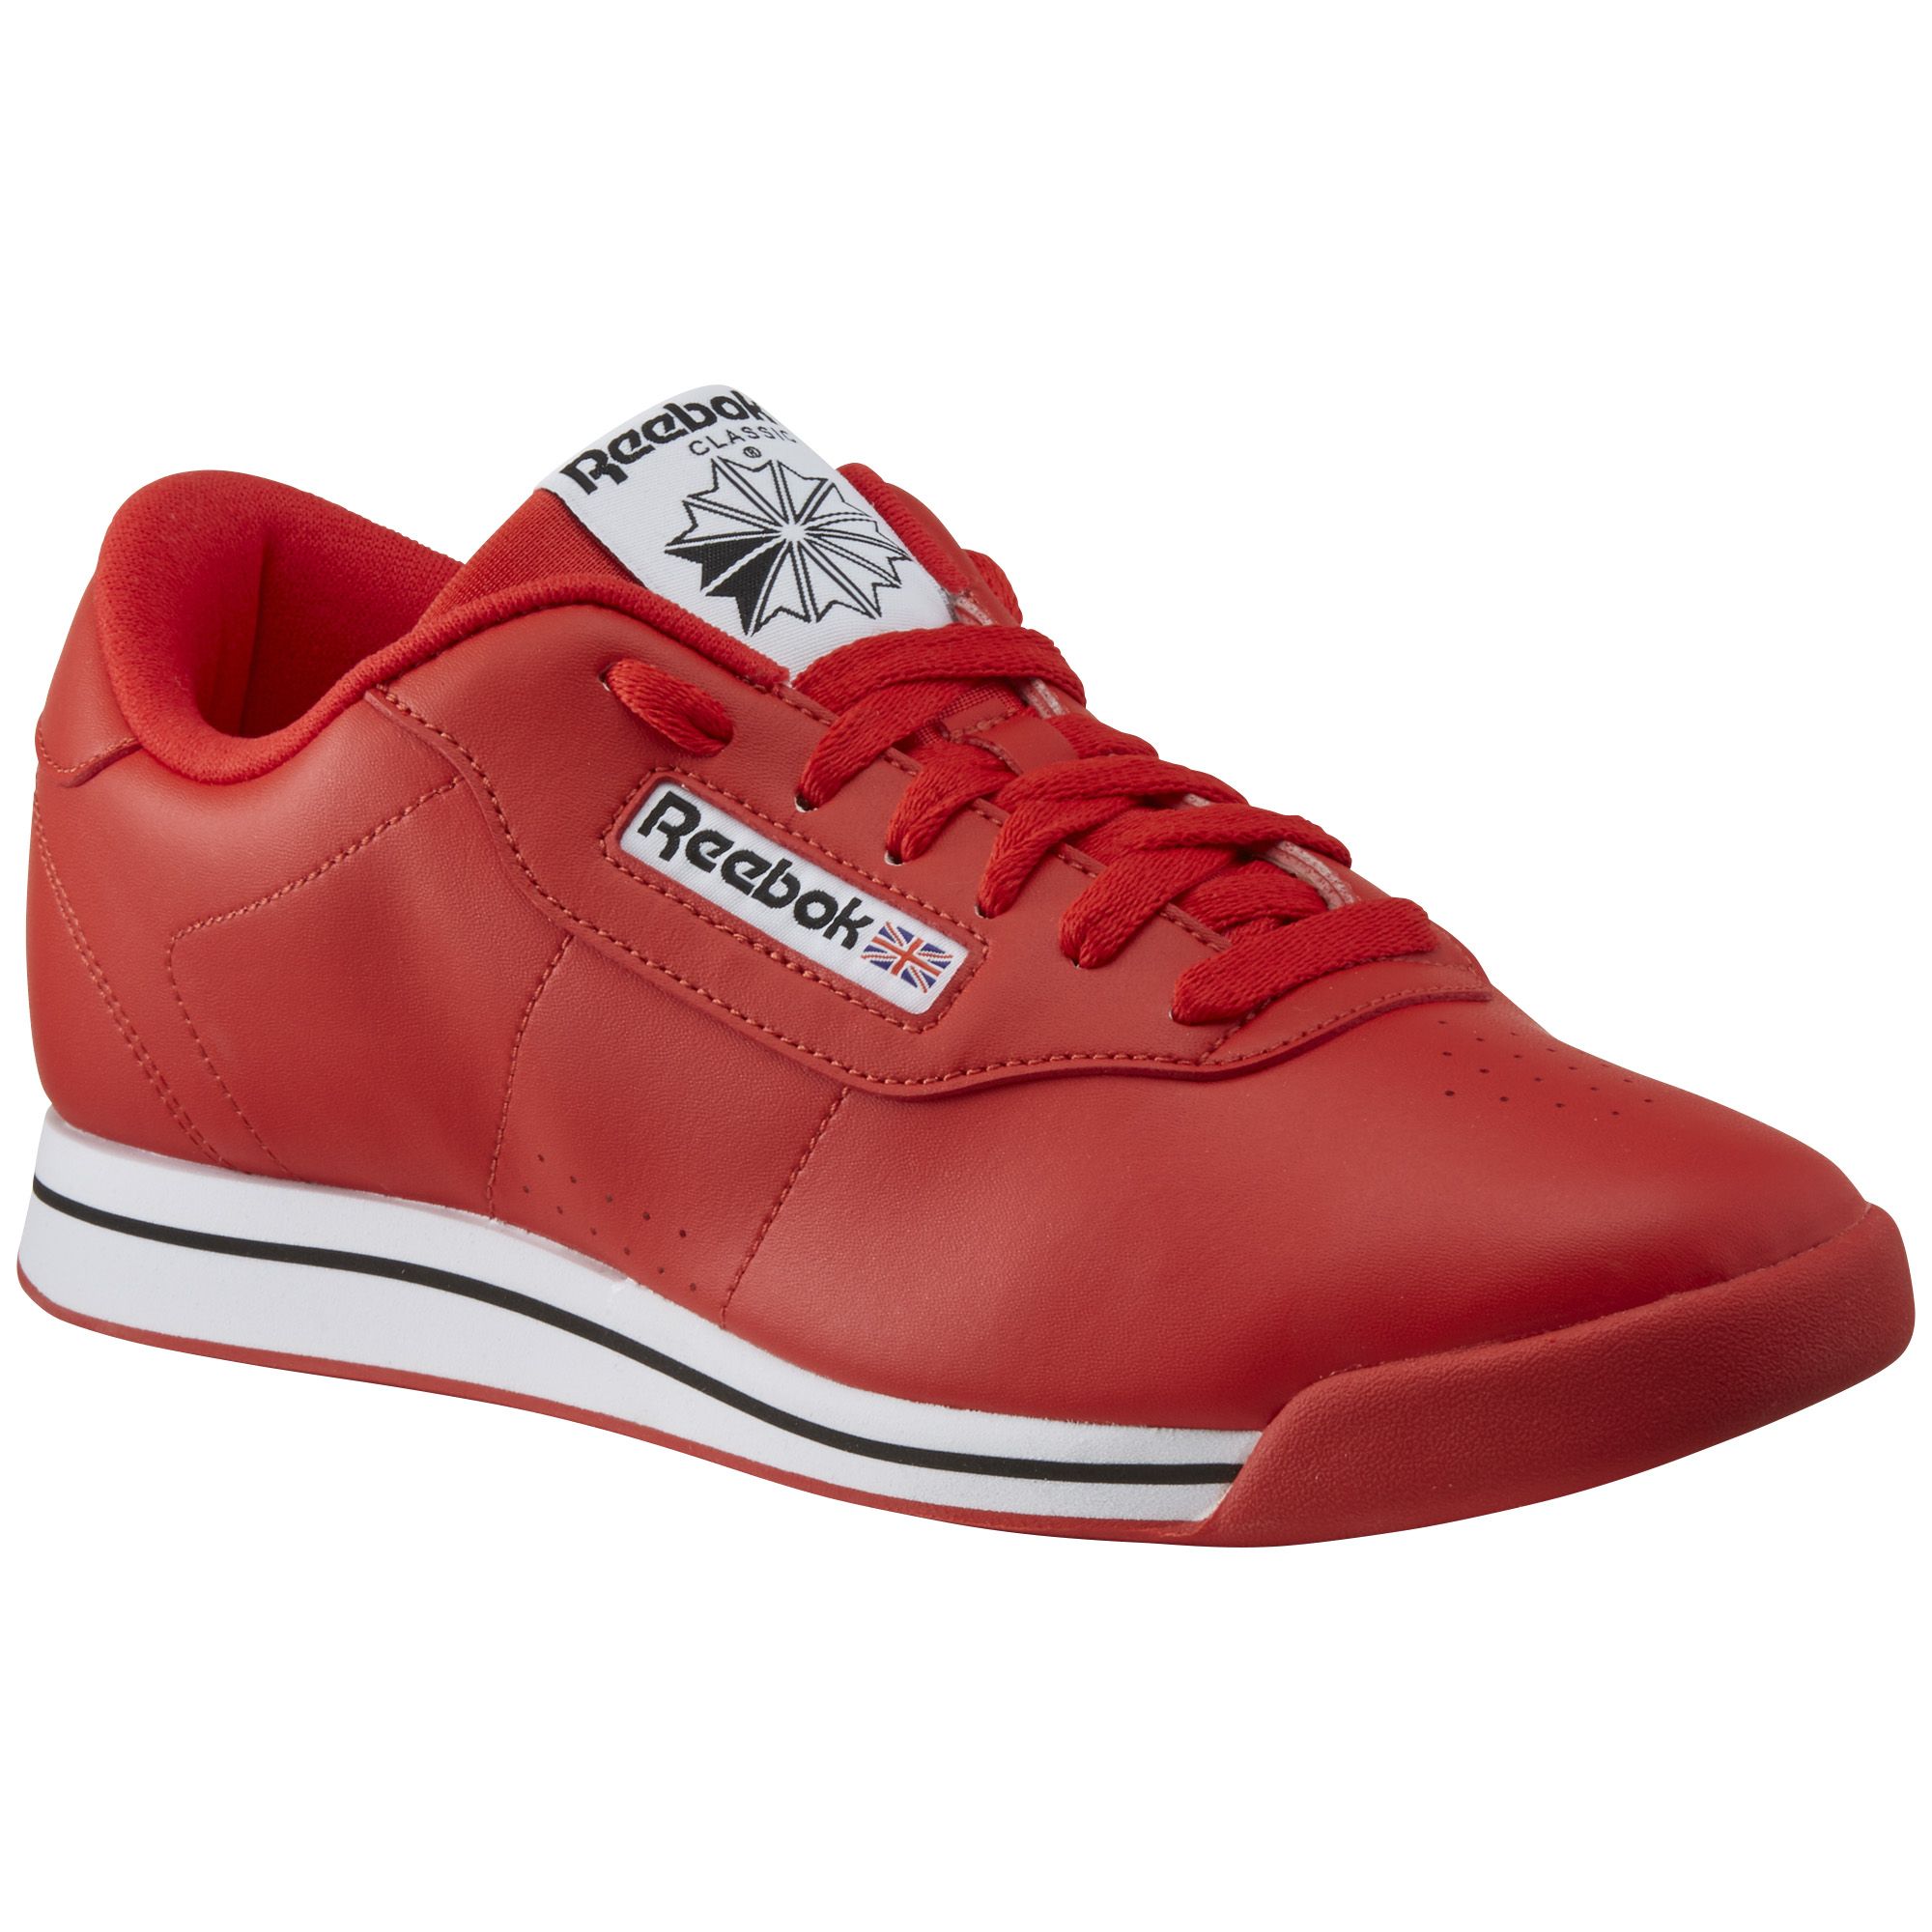 Fingerhut - Reebok Women's Princess Classic Athletic Shoe